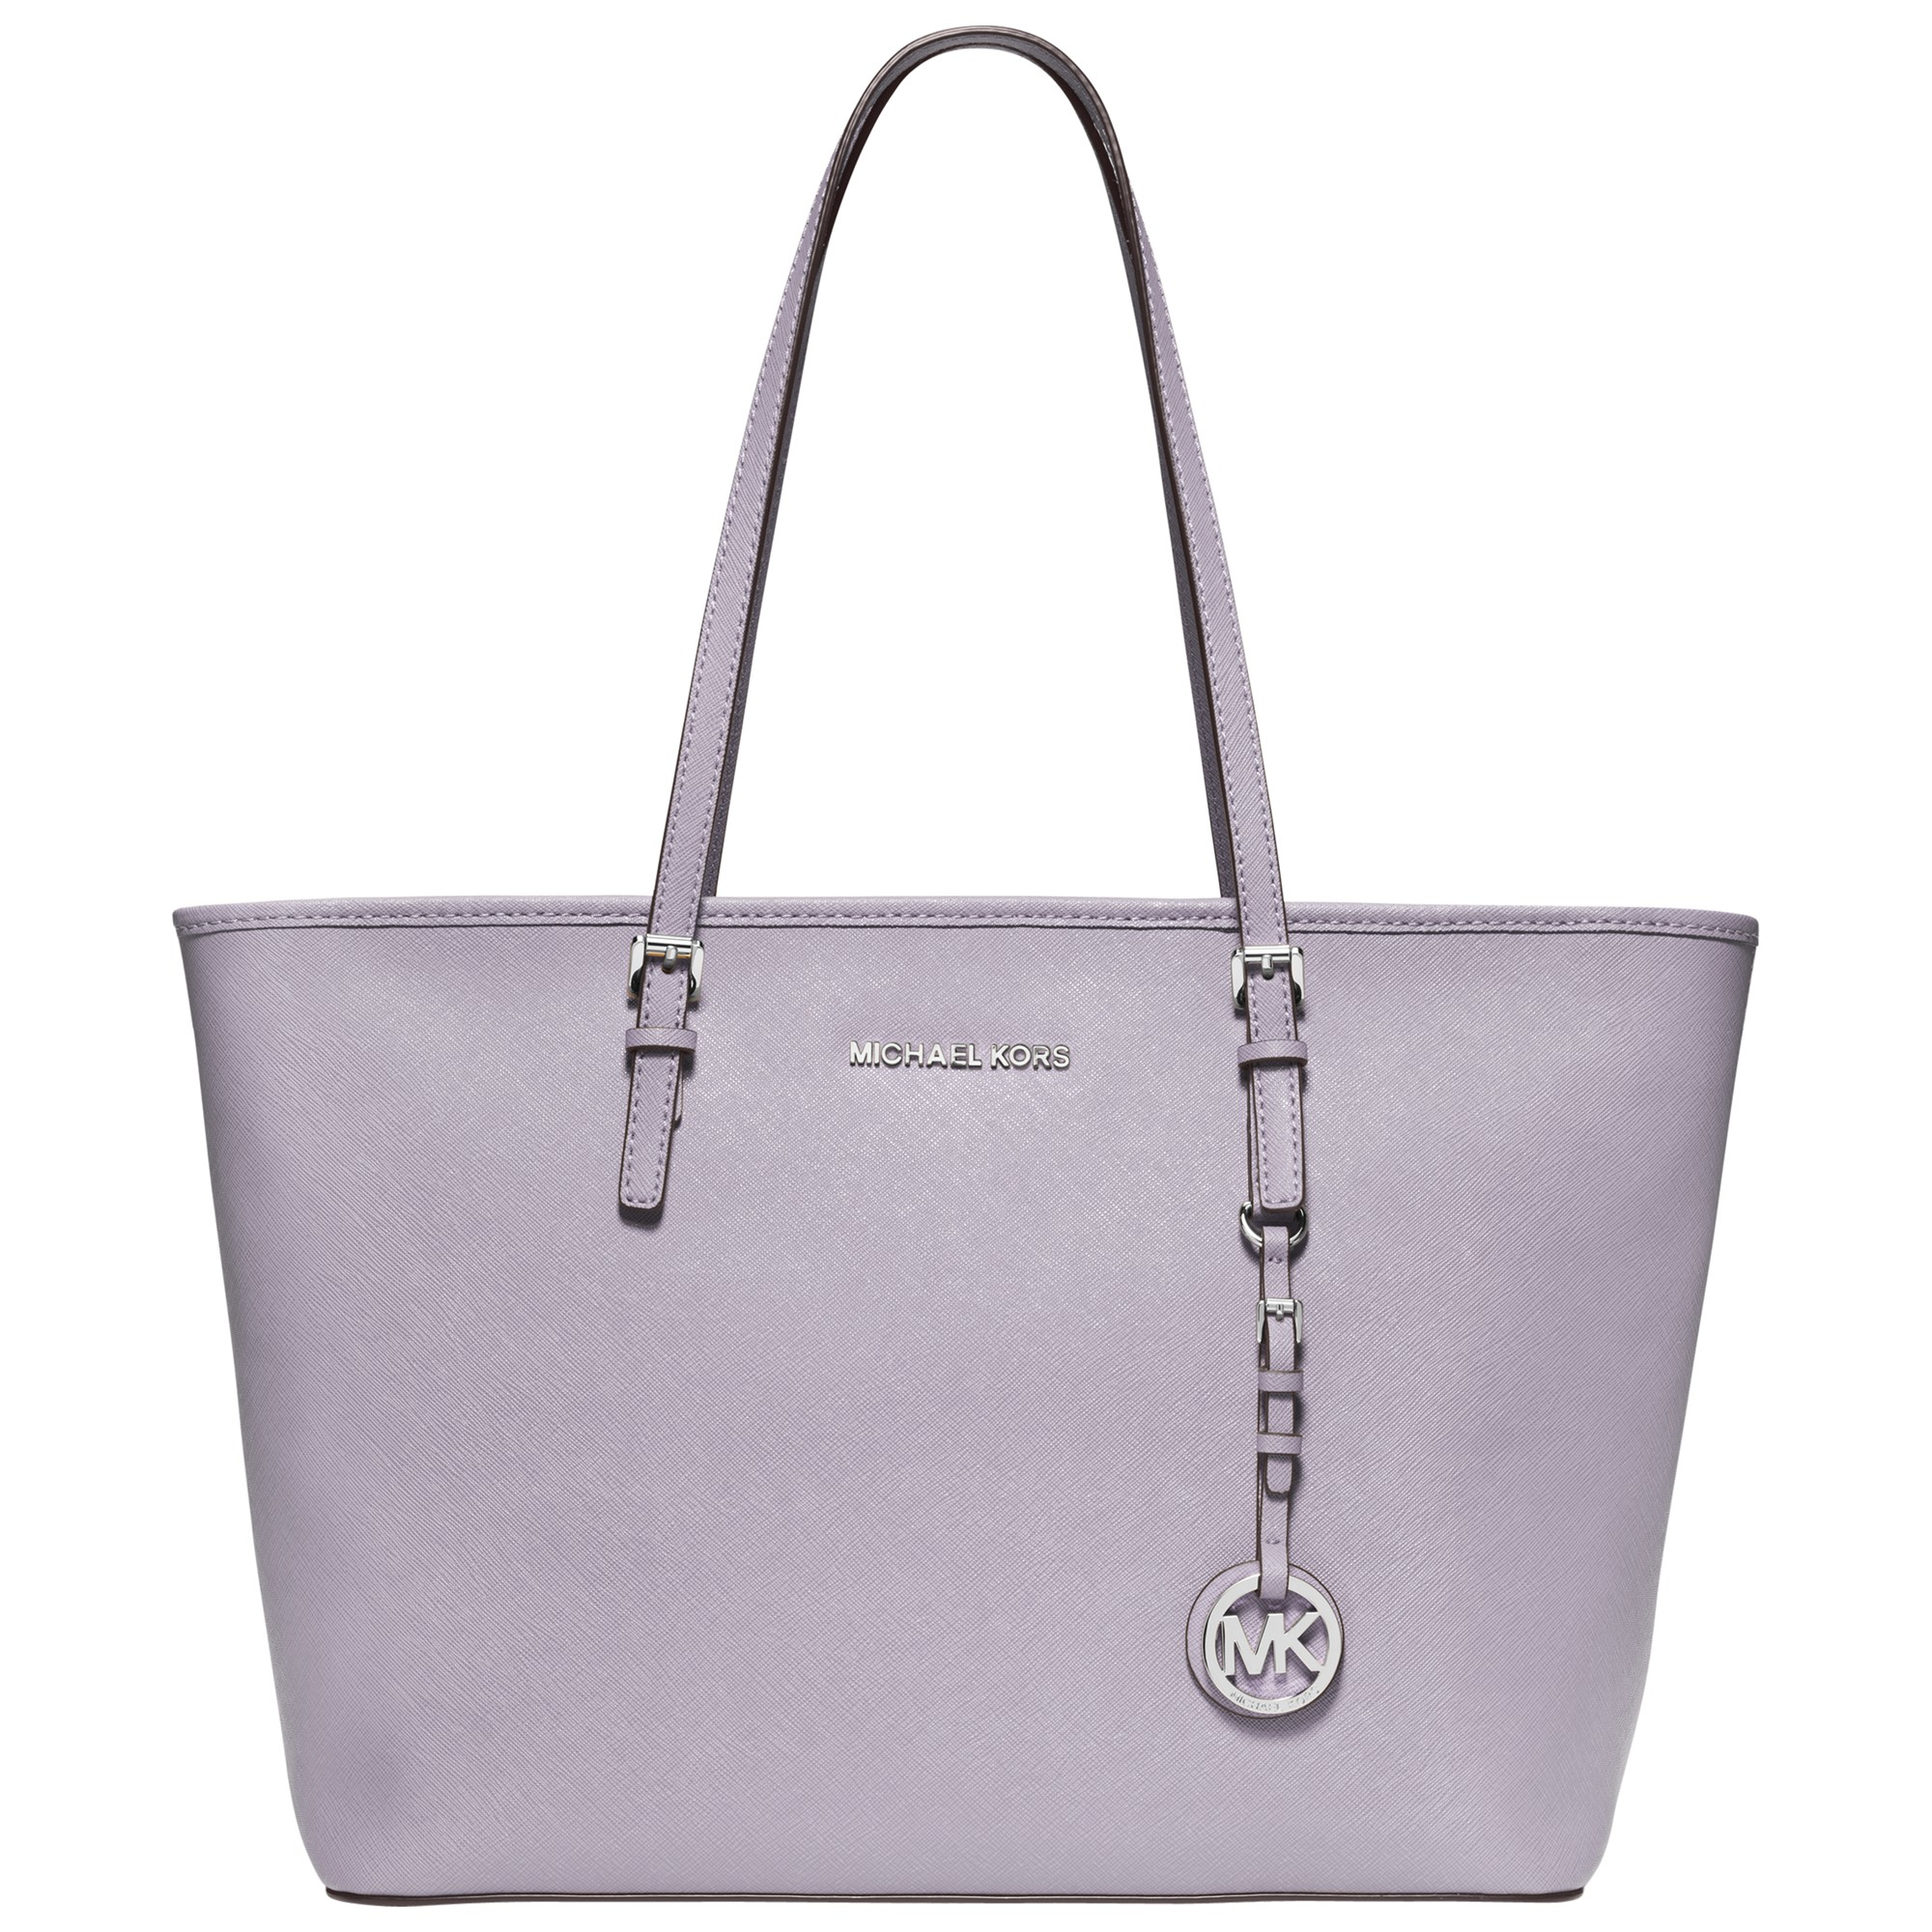 Michael Kors Purple Tote Handbags | NAR Media Kit